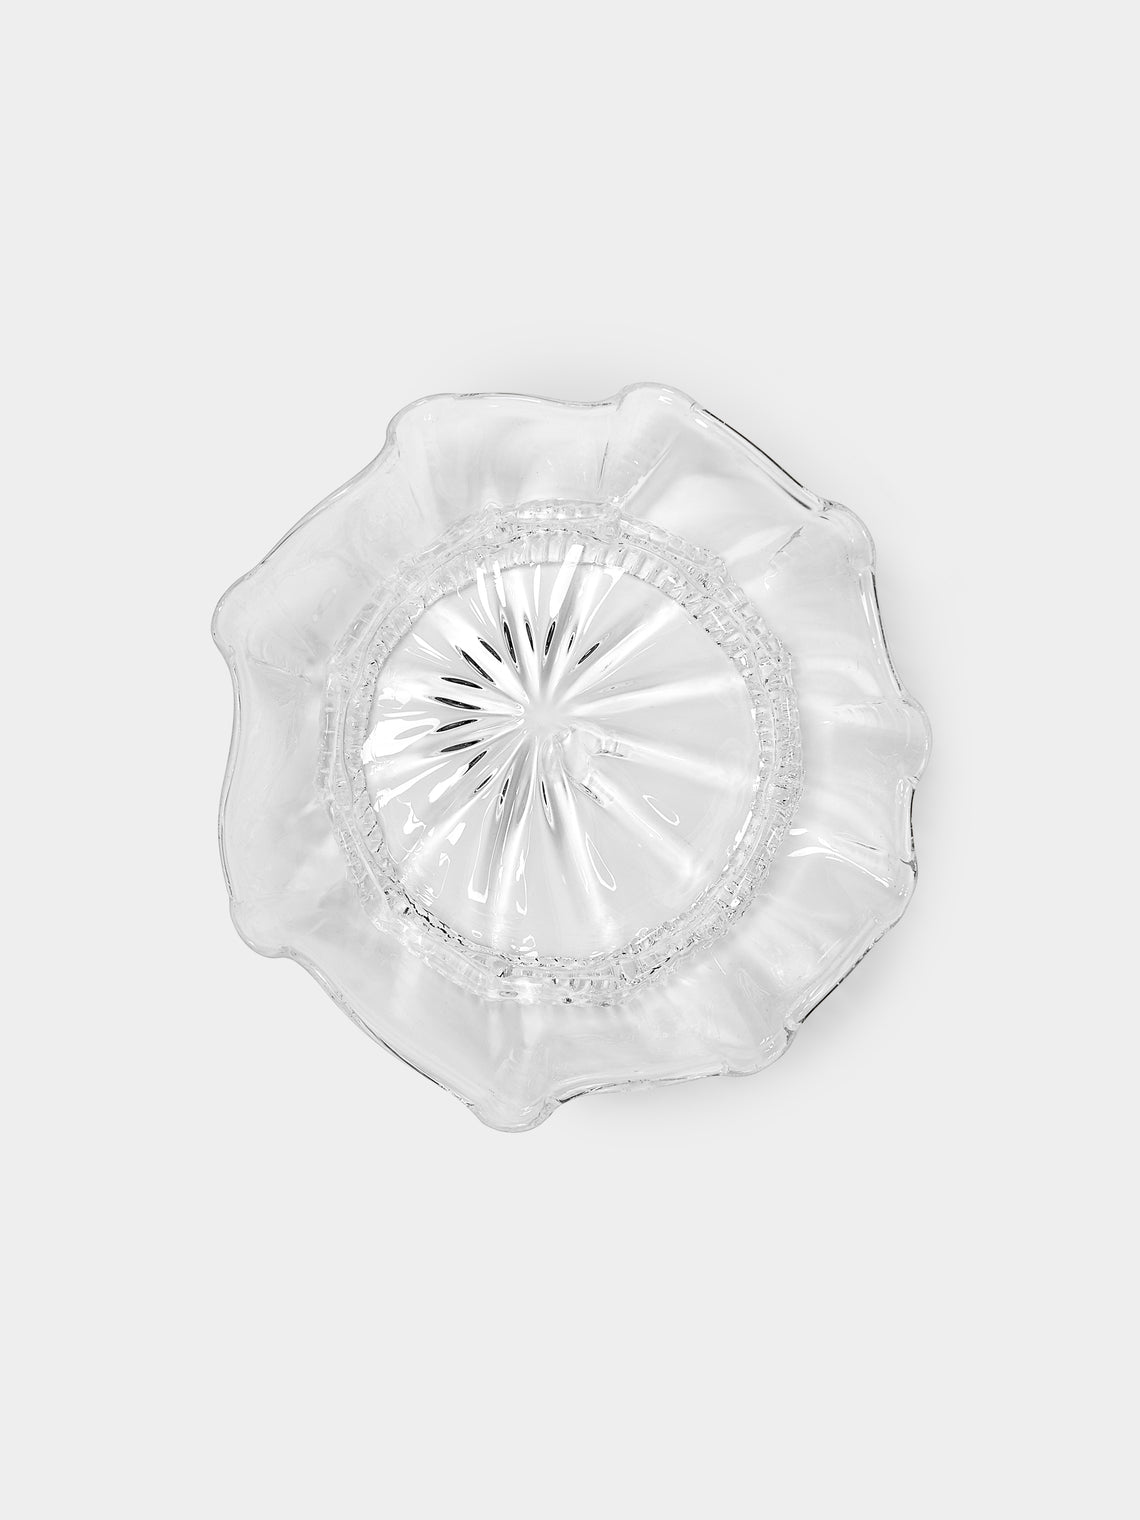 Alexander Kirkeby - Hand-Blown Crystal Dessert Bowl -  - ABASK